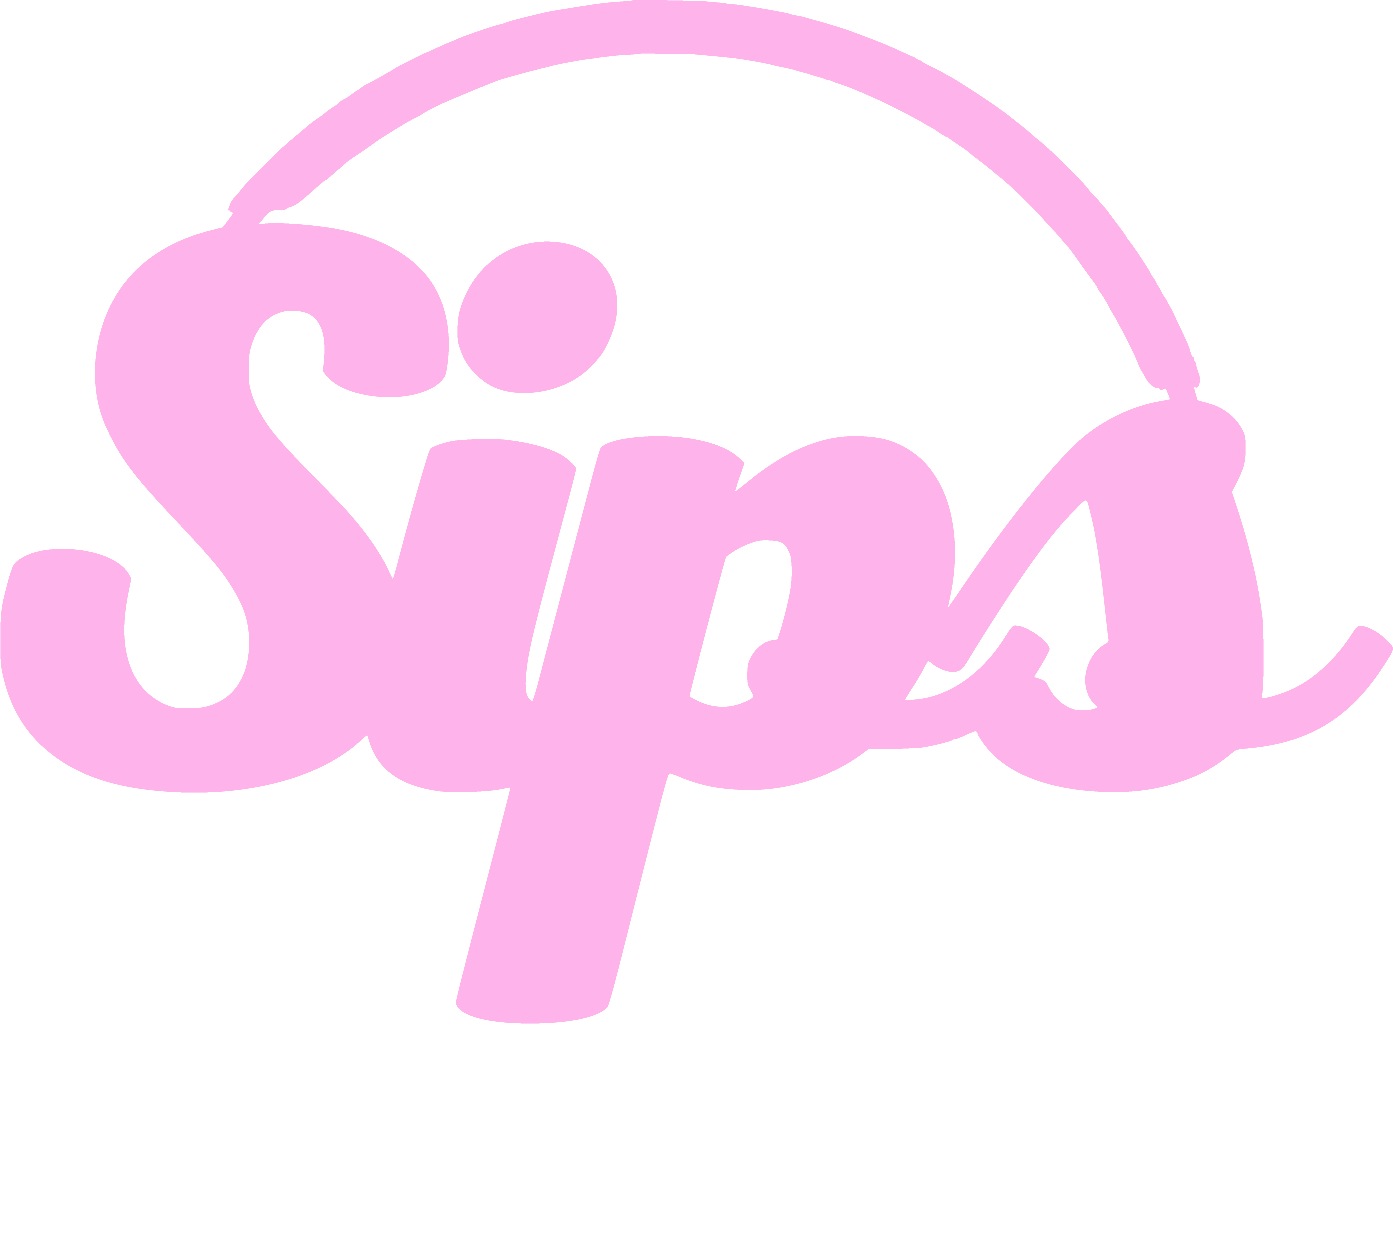 Sips Sodas & Snacks